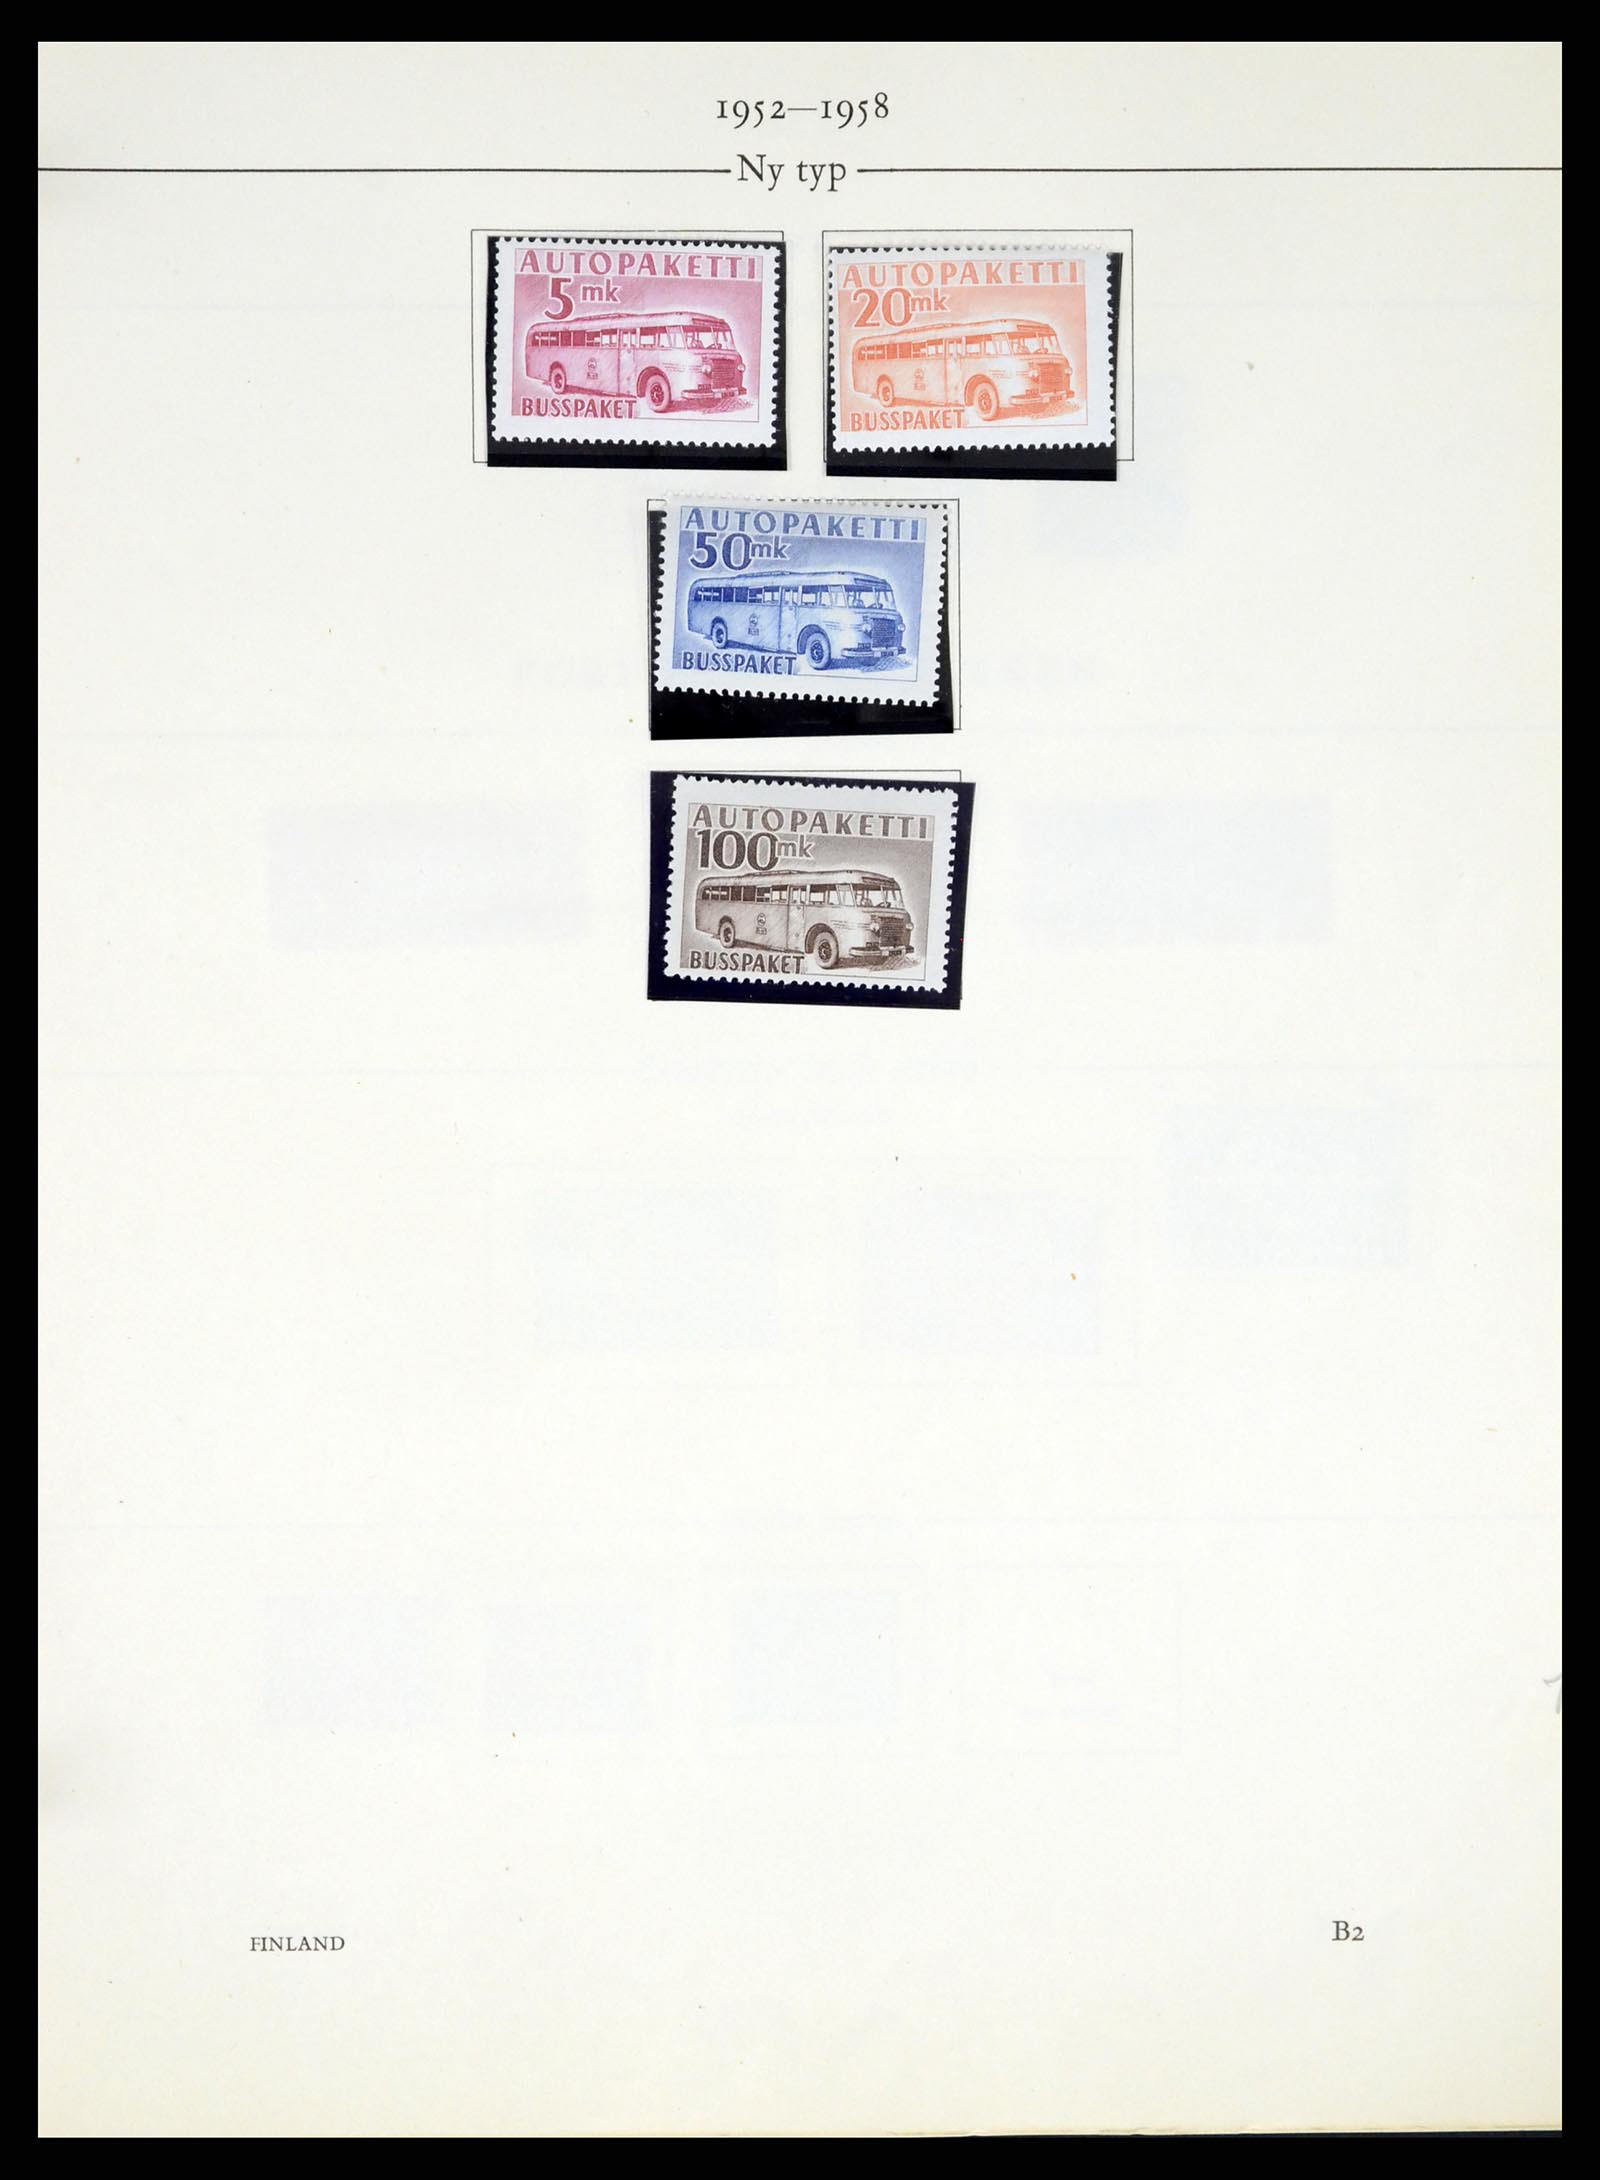 37387 227 - Stamp collection 37387 Scandinavia 1851-1960.